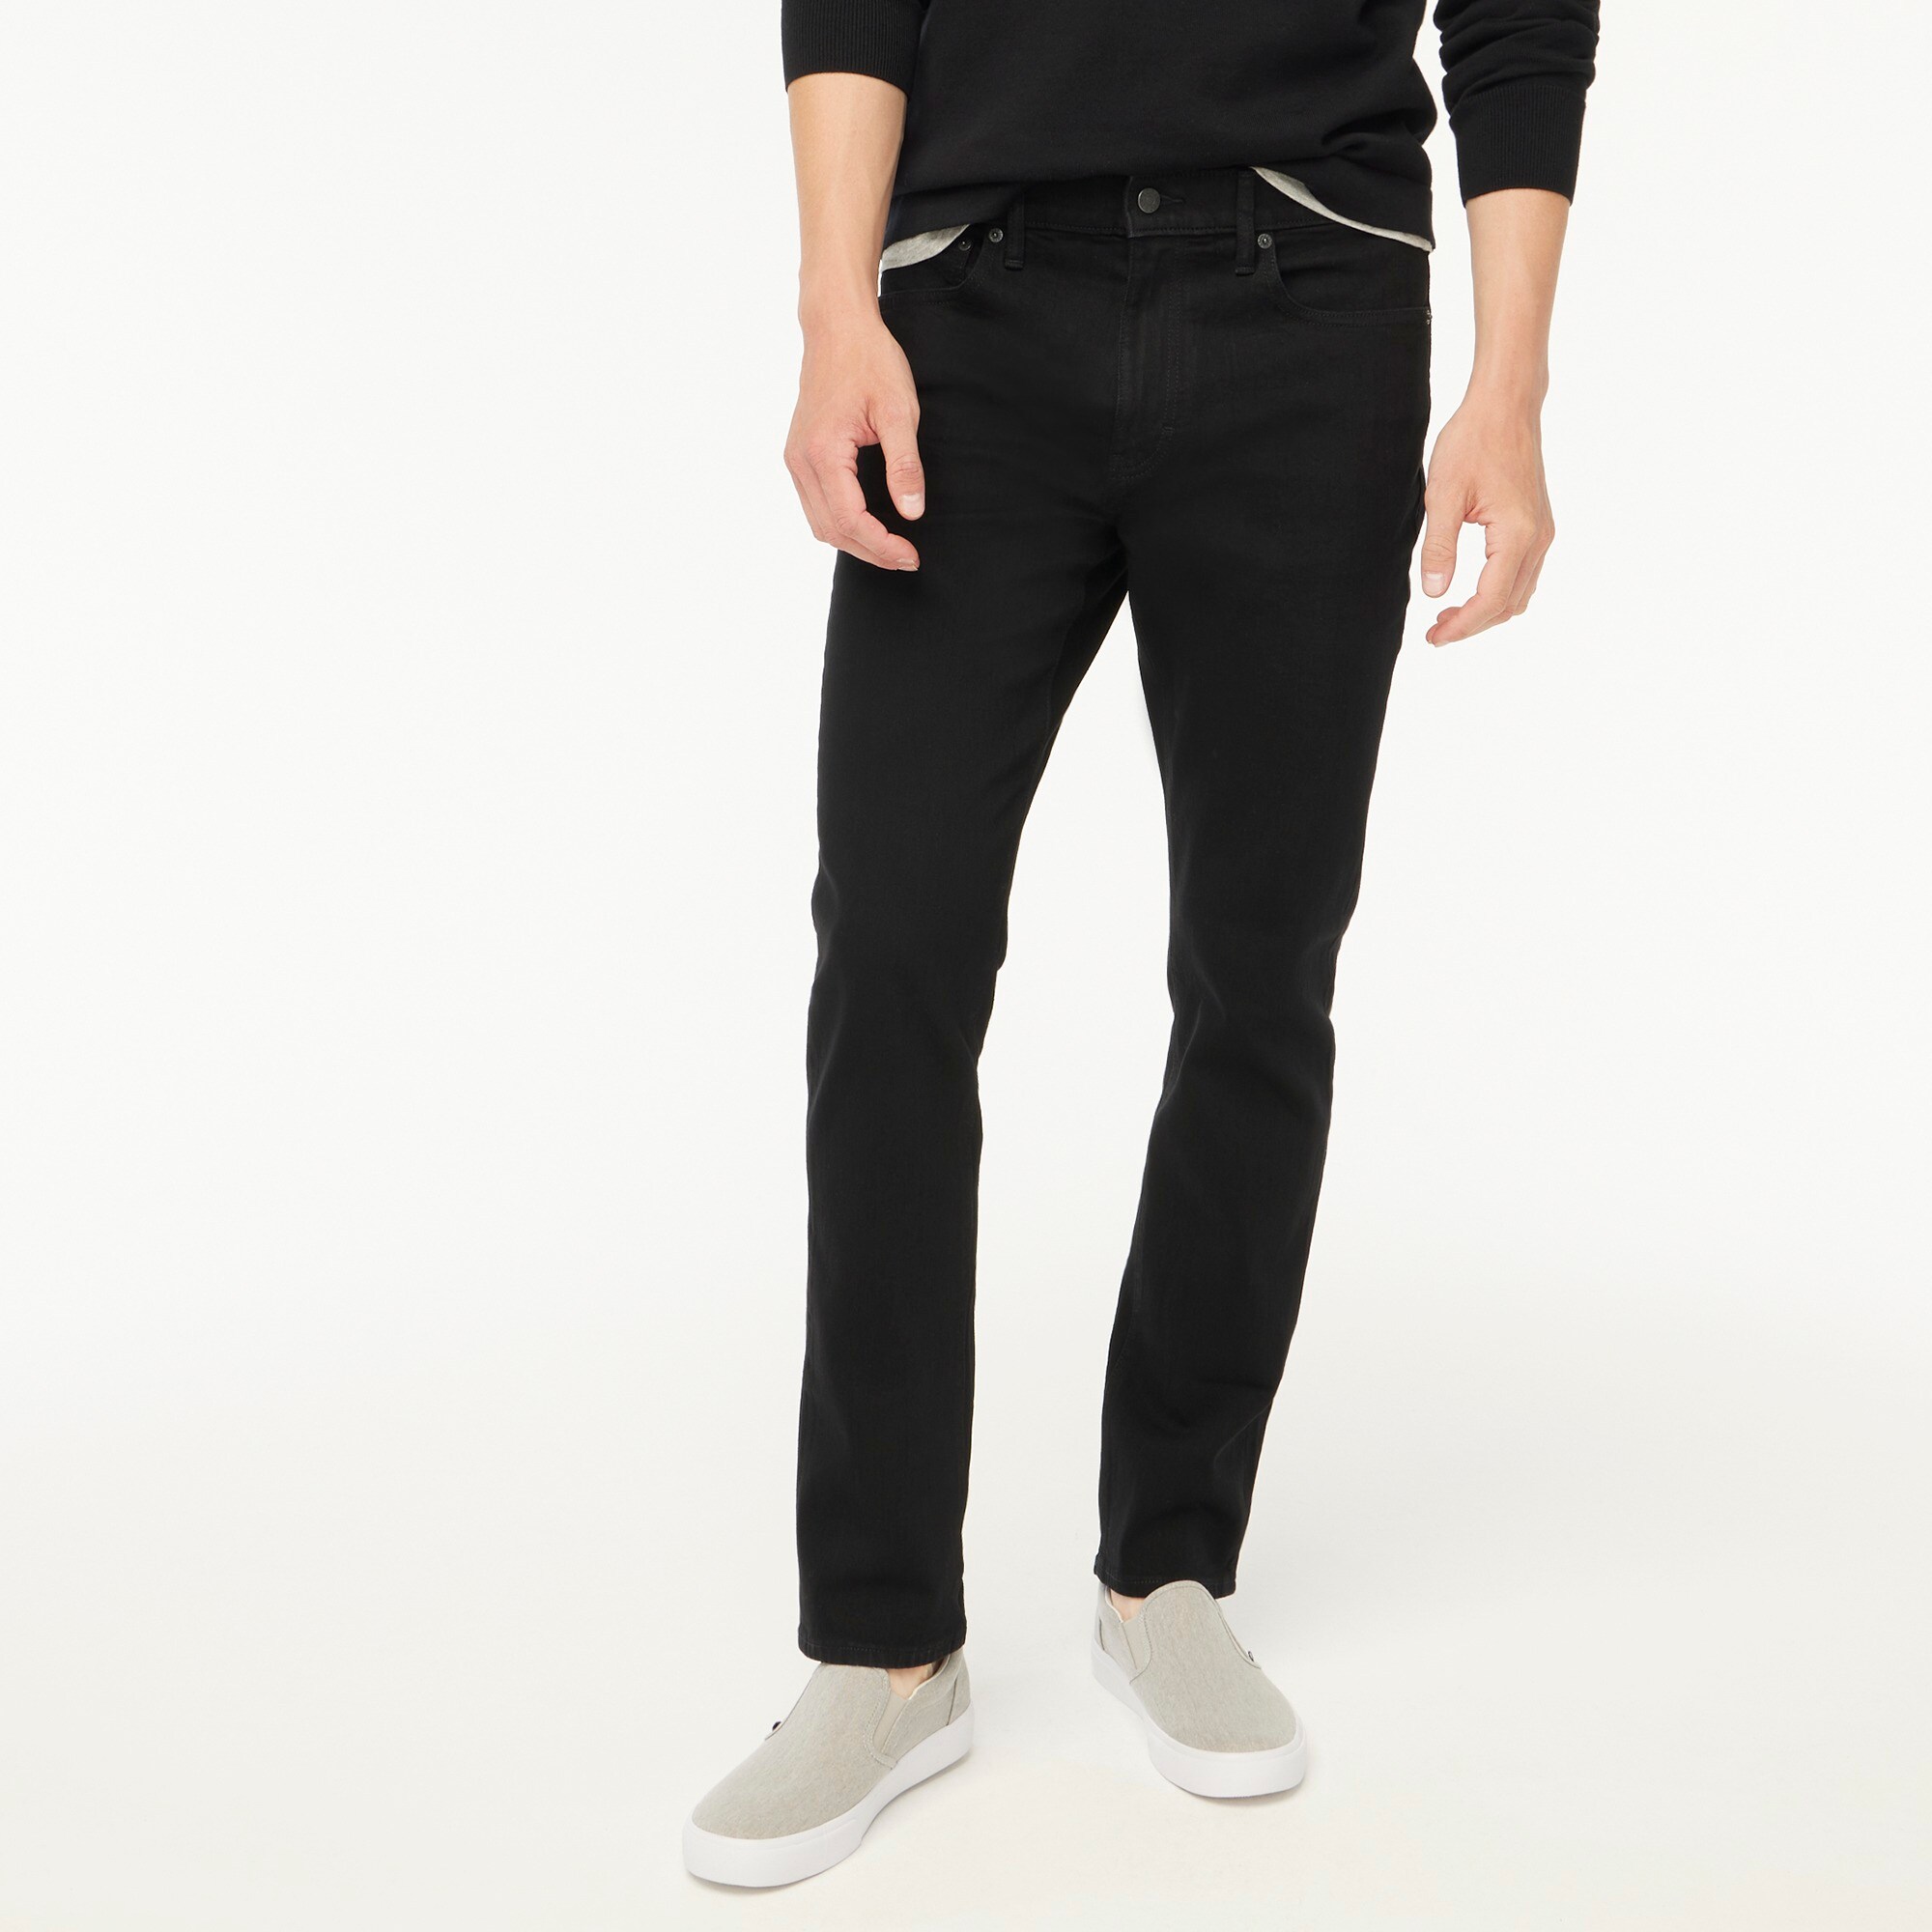 mens Straight-fit jean in in signature flex